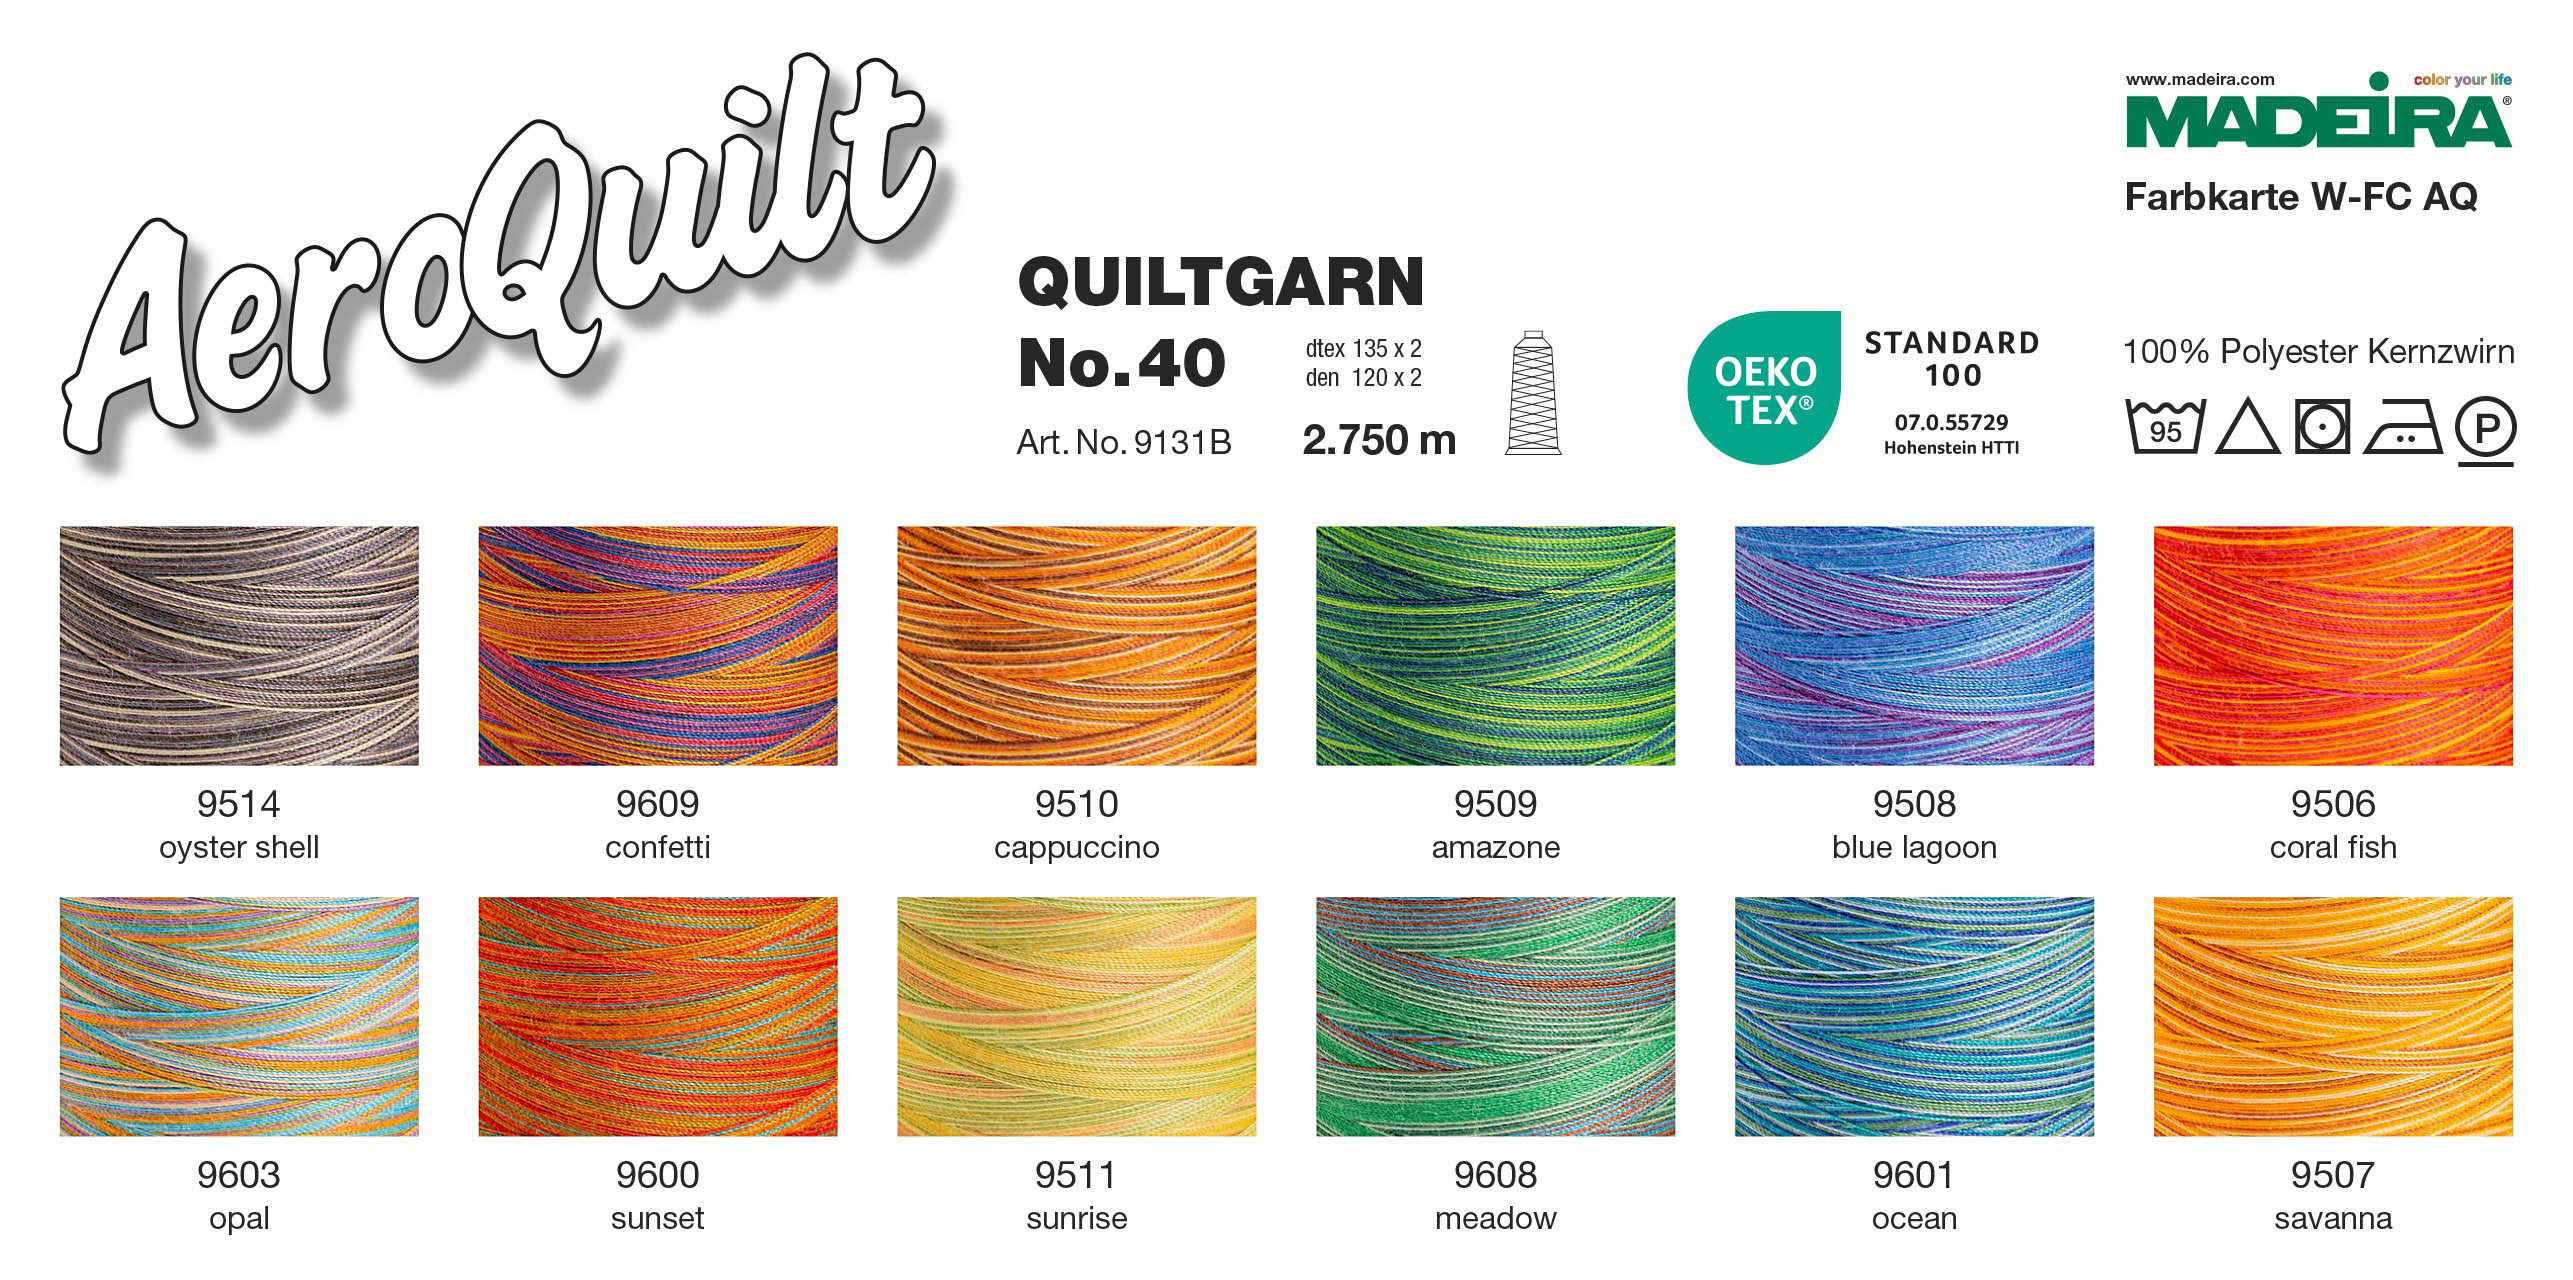 Madeira AeroQuilt, Machine Quilting Thread Multicolor, 3000 Yards